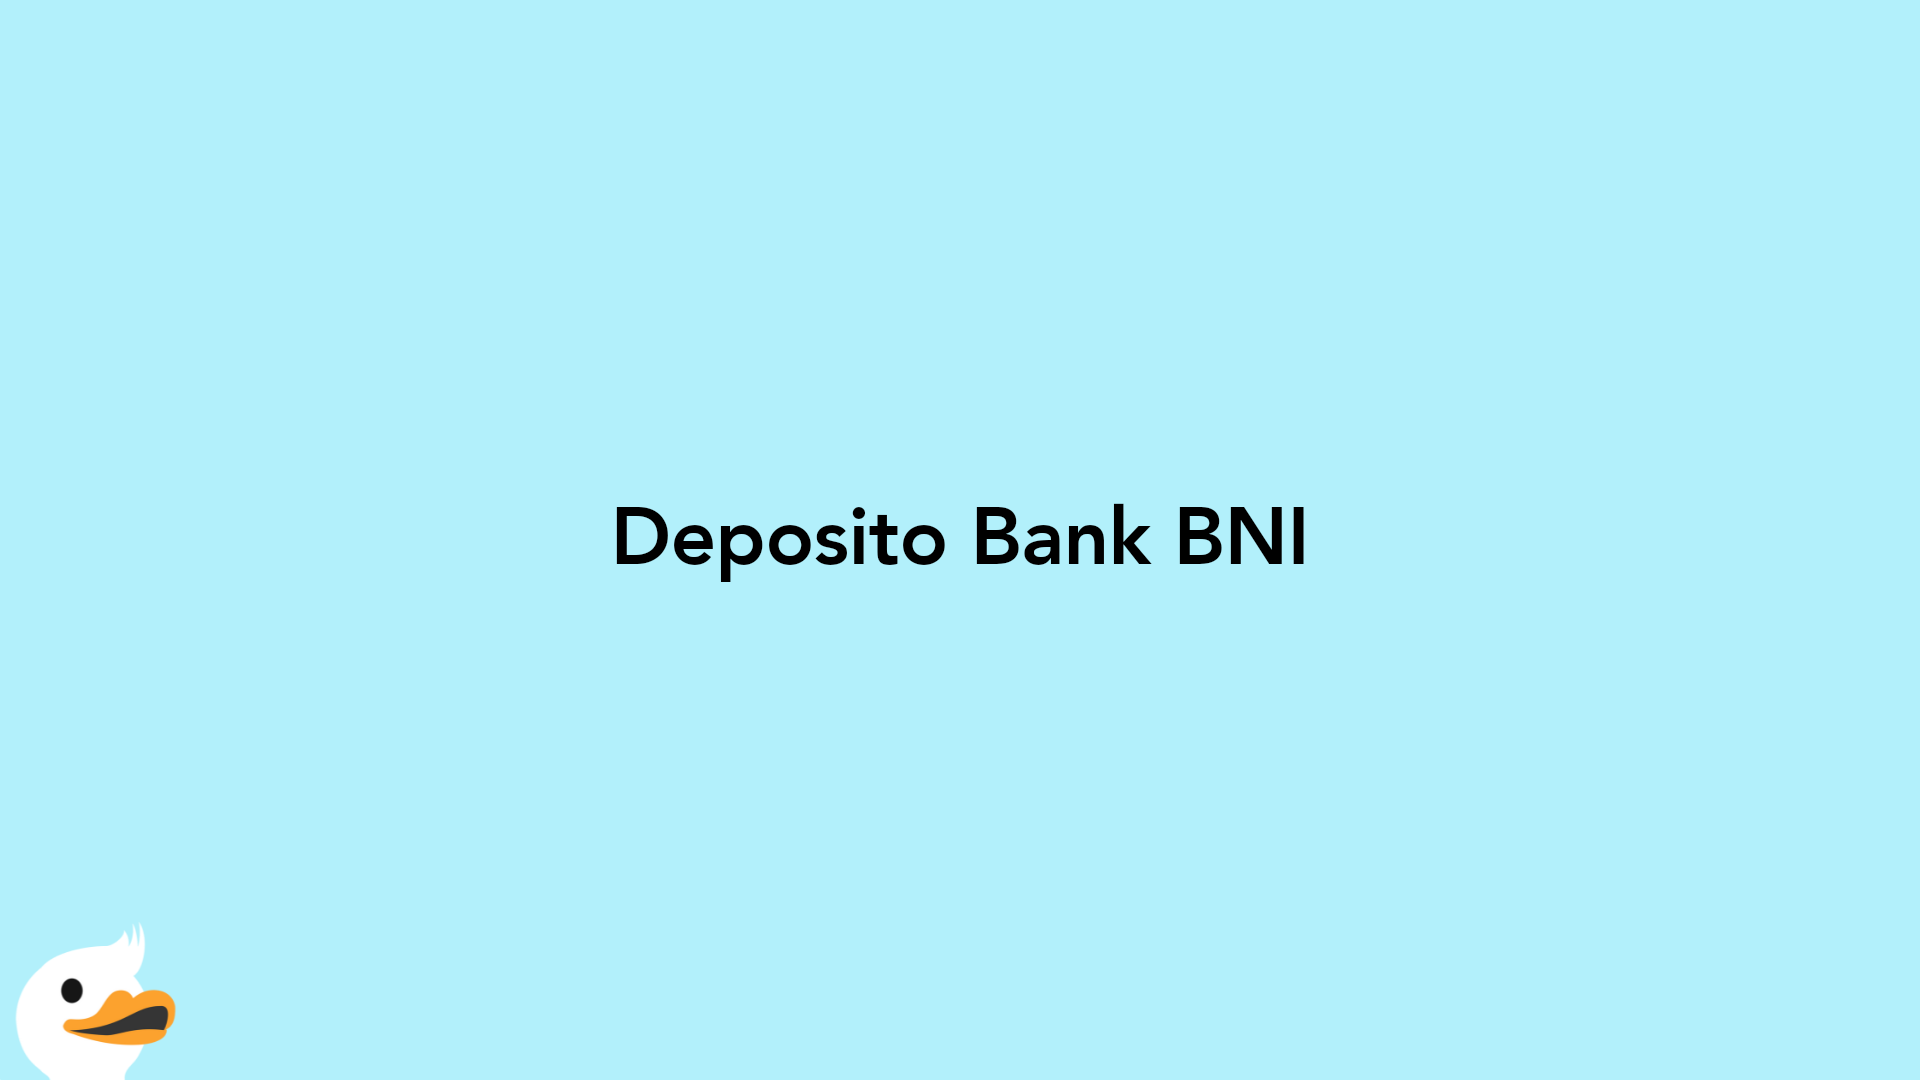 Deposito Bank BNI